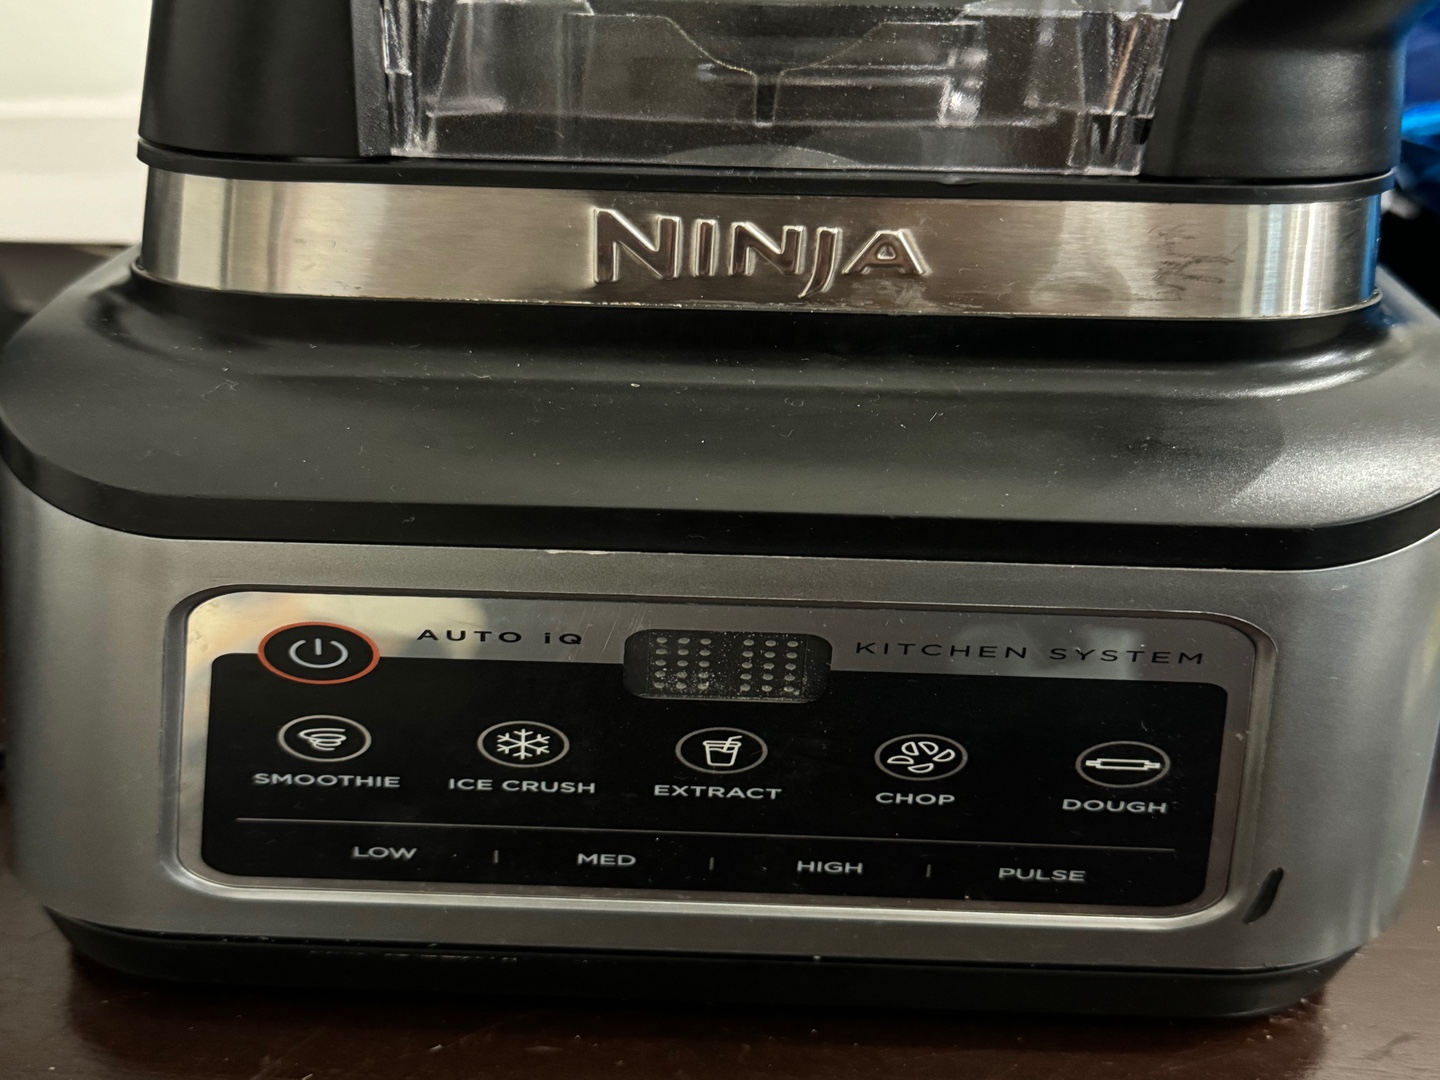 electrodomesticos - Licuadora Ninja IQ Kitchen System 1,200 wats totalmente nuevas  2